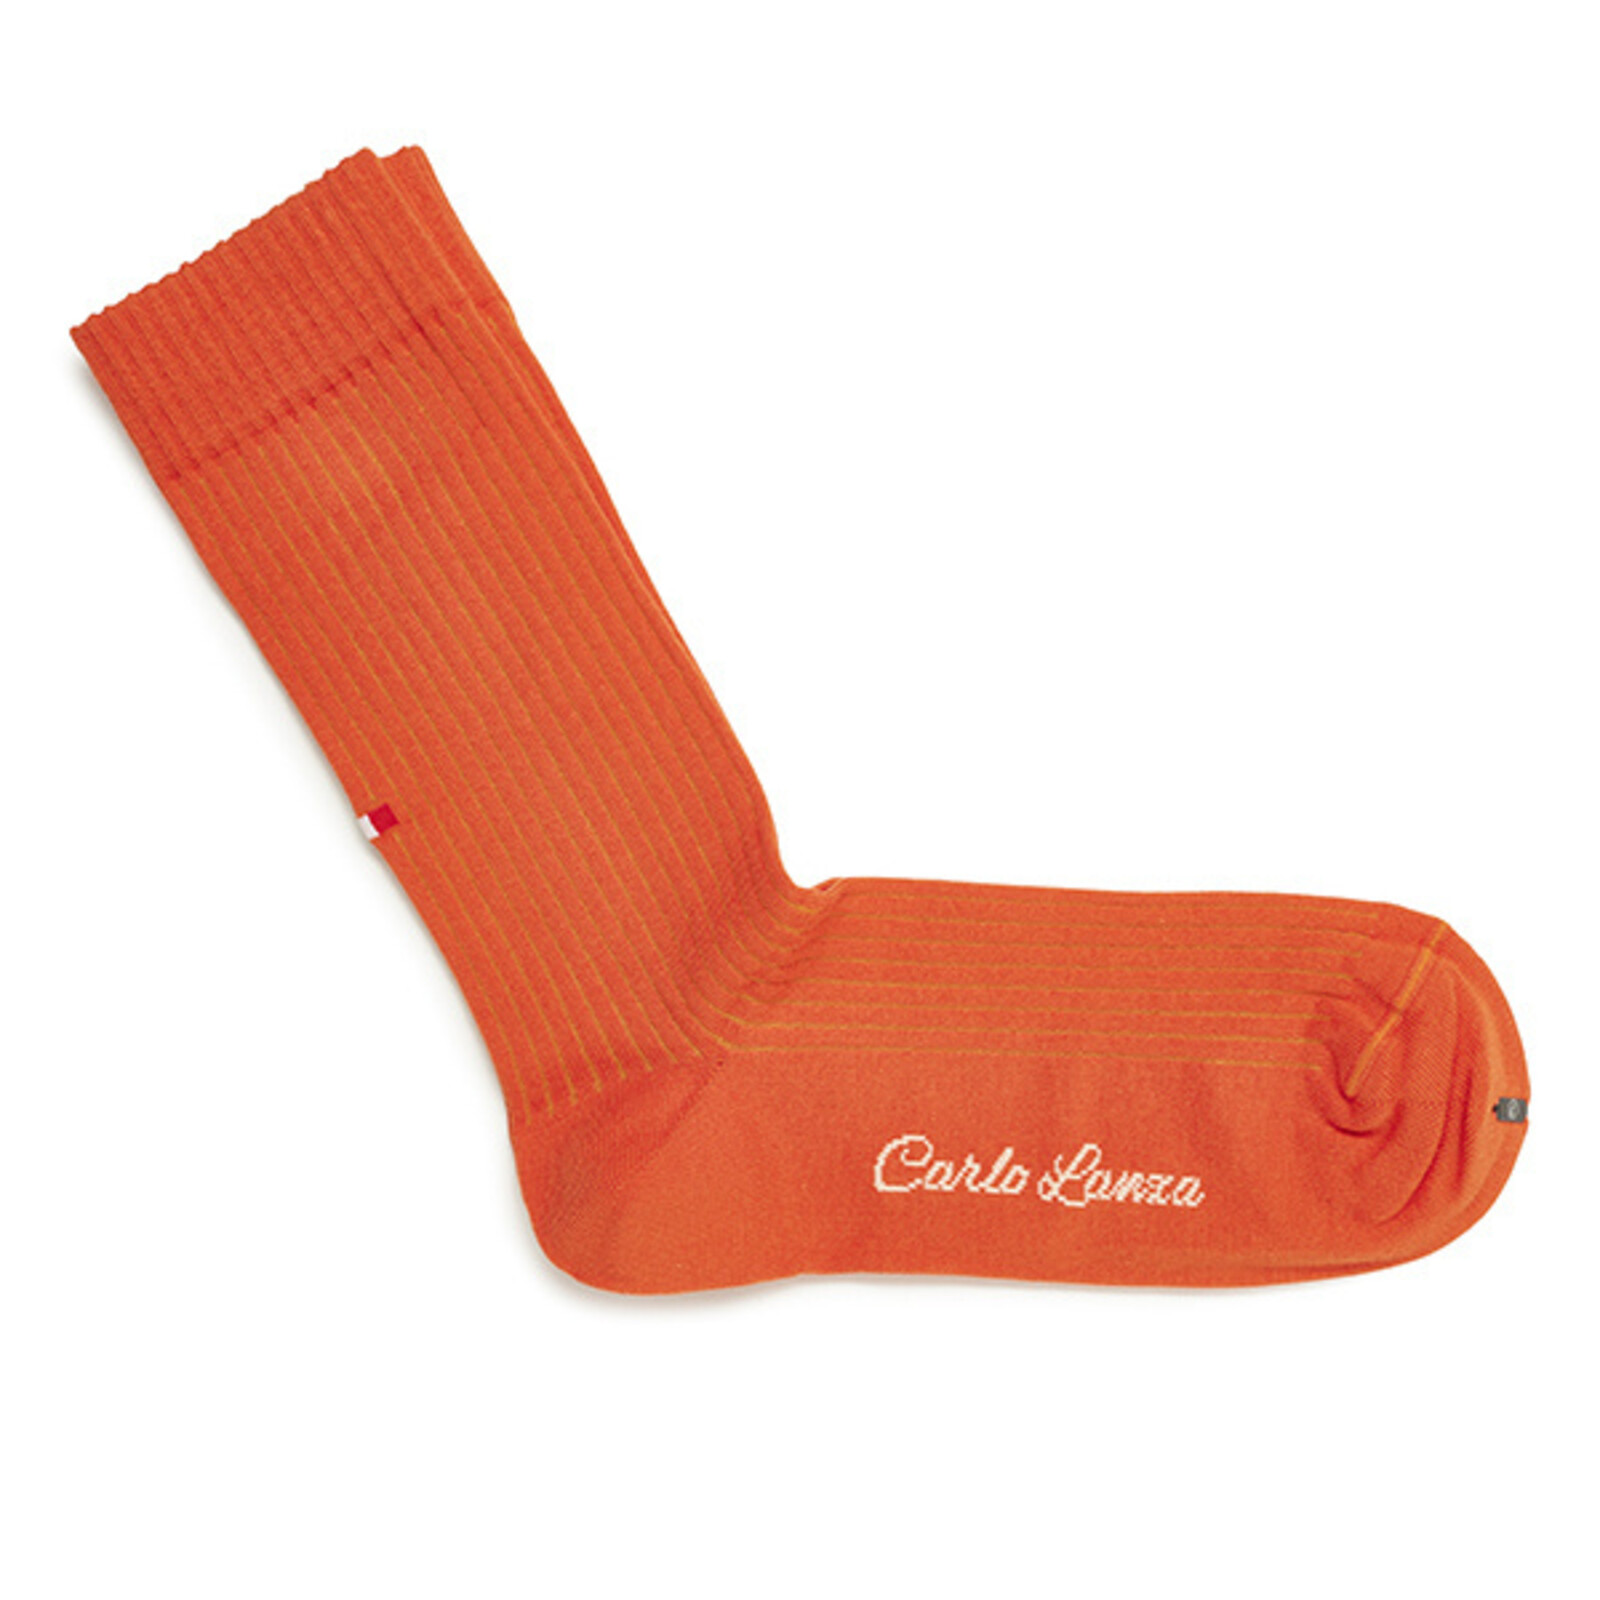 Carlo Lanza Orange rib socks